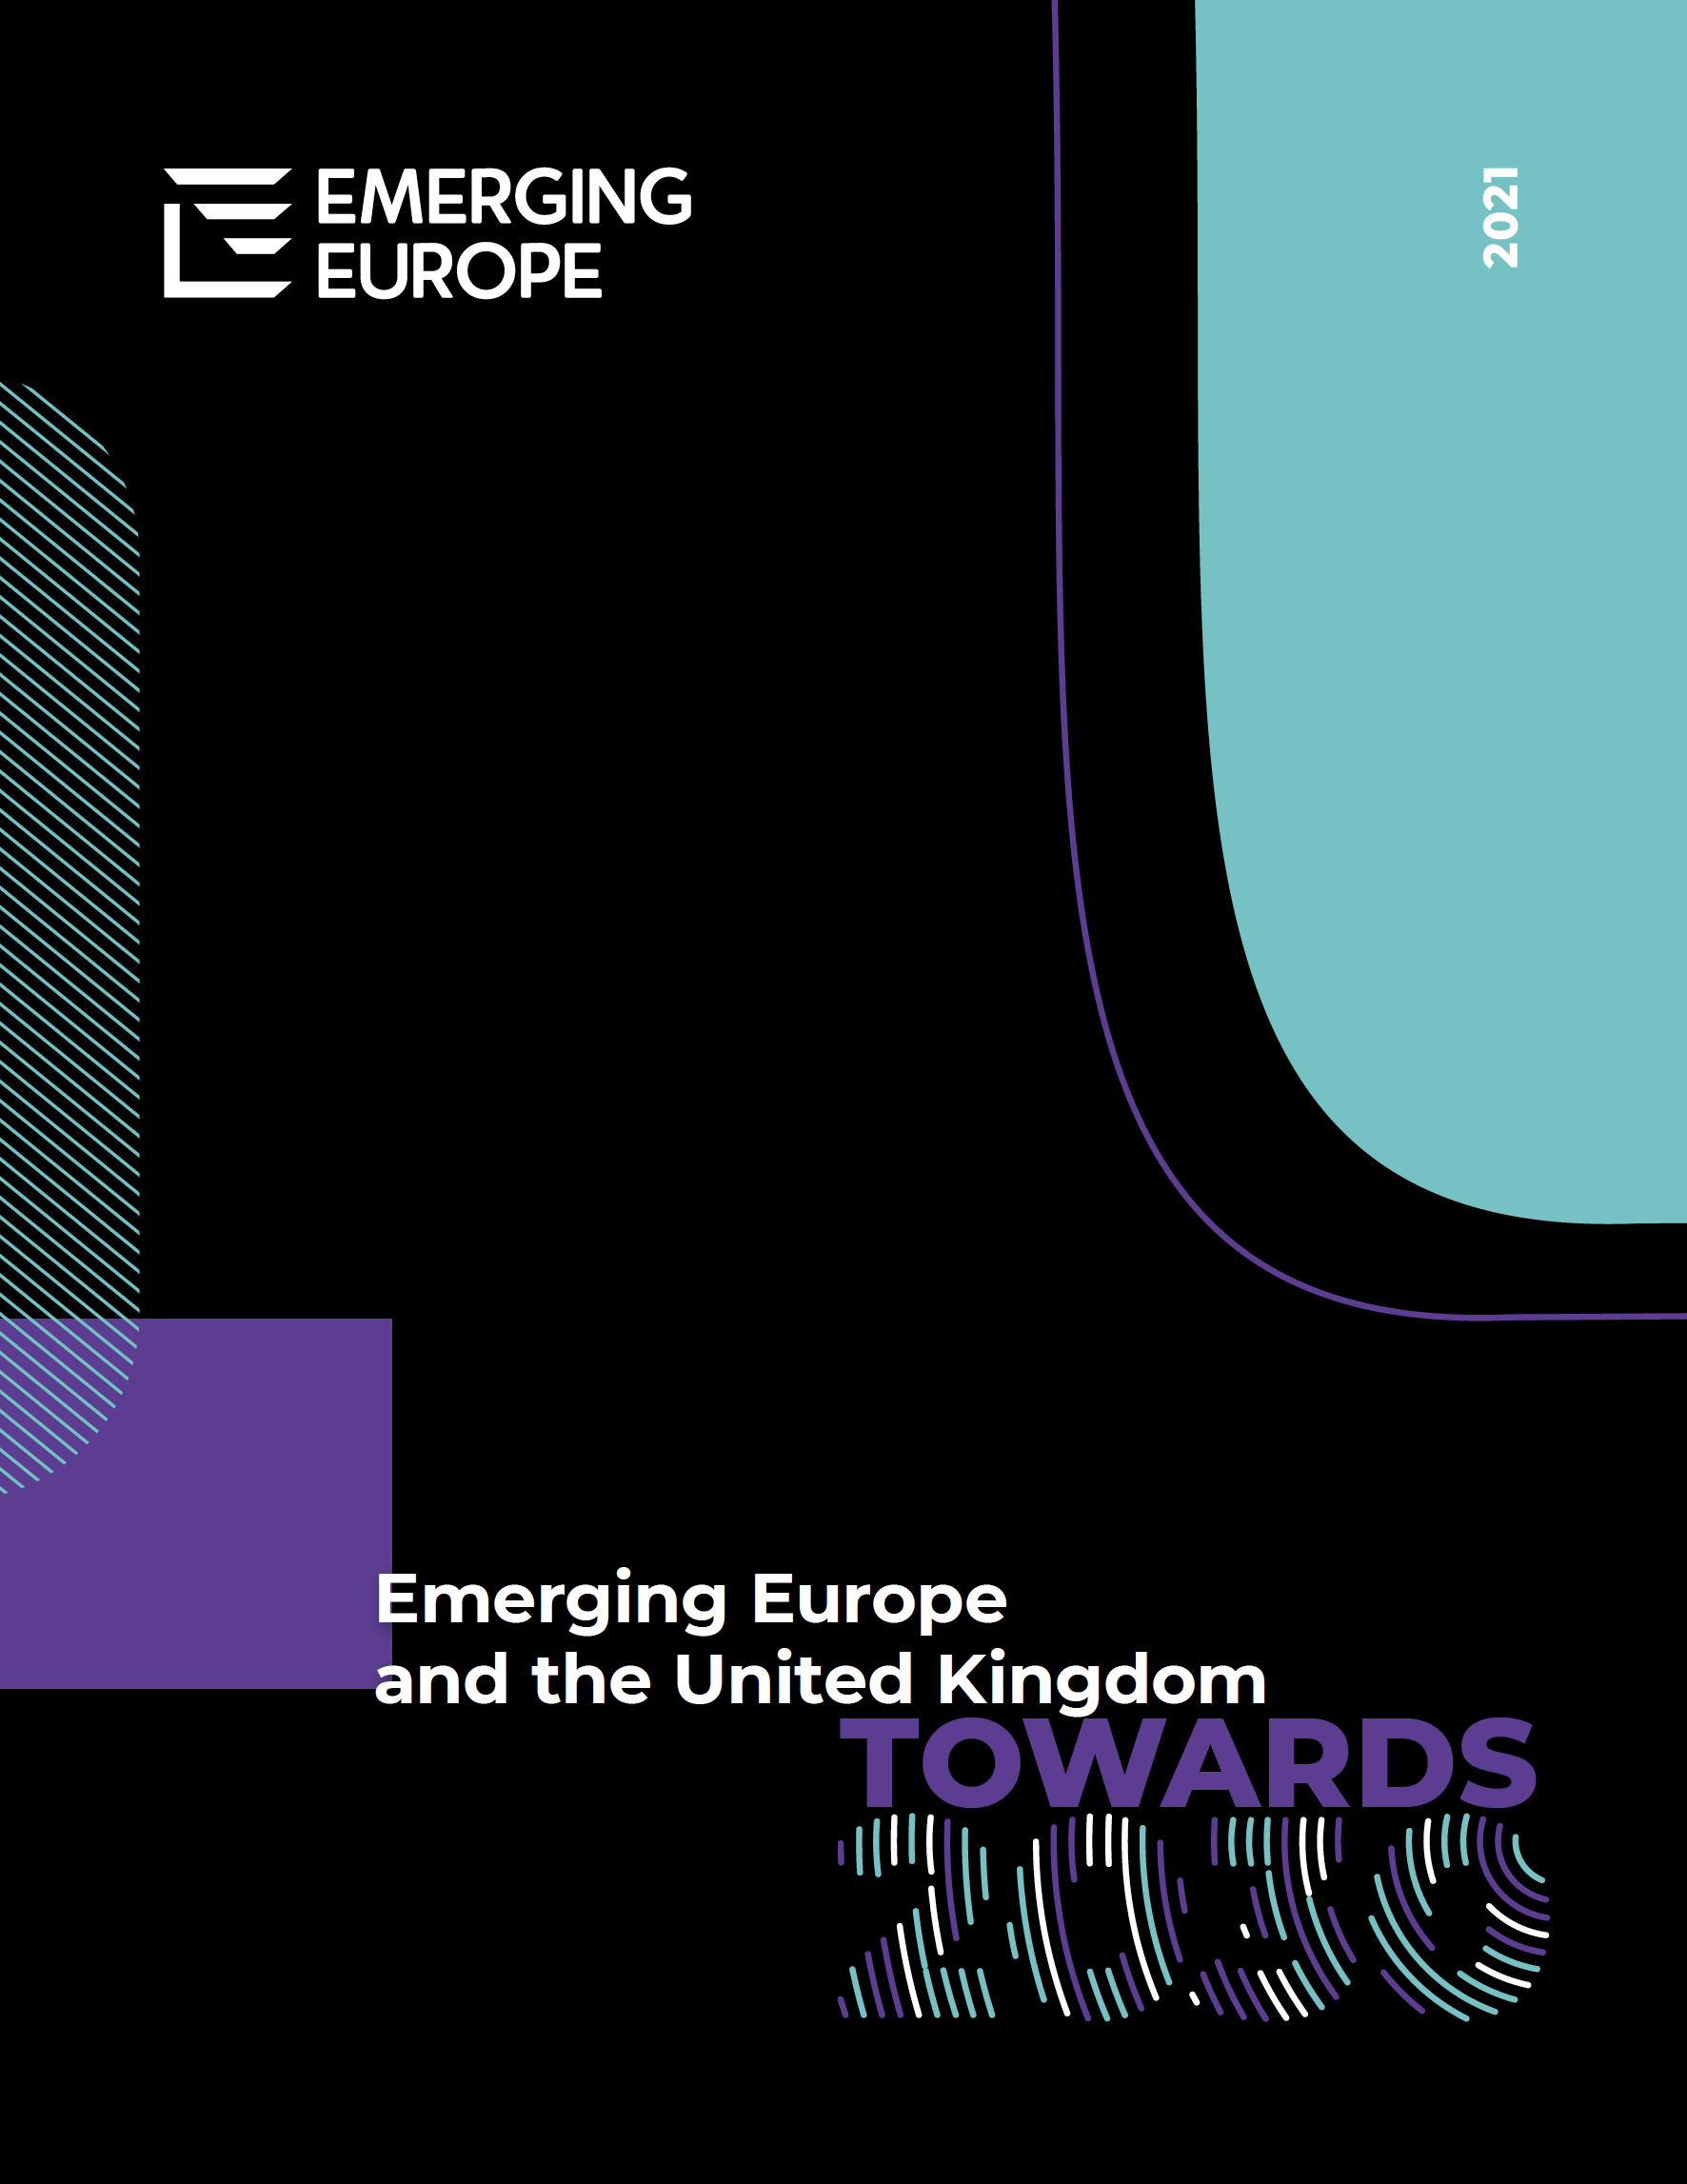 Emerging Europe and the United Kingdom: Towards 2030